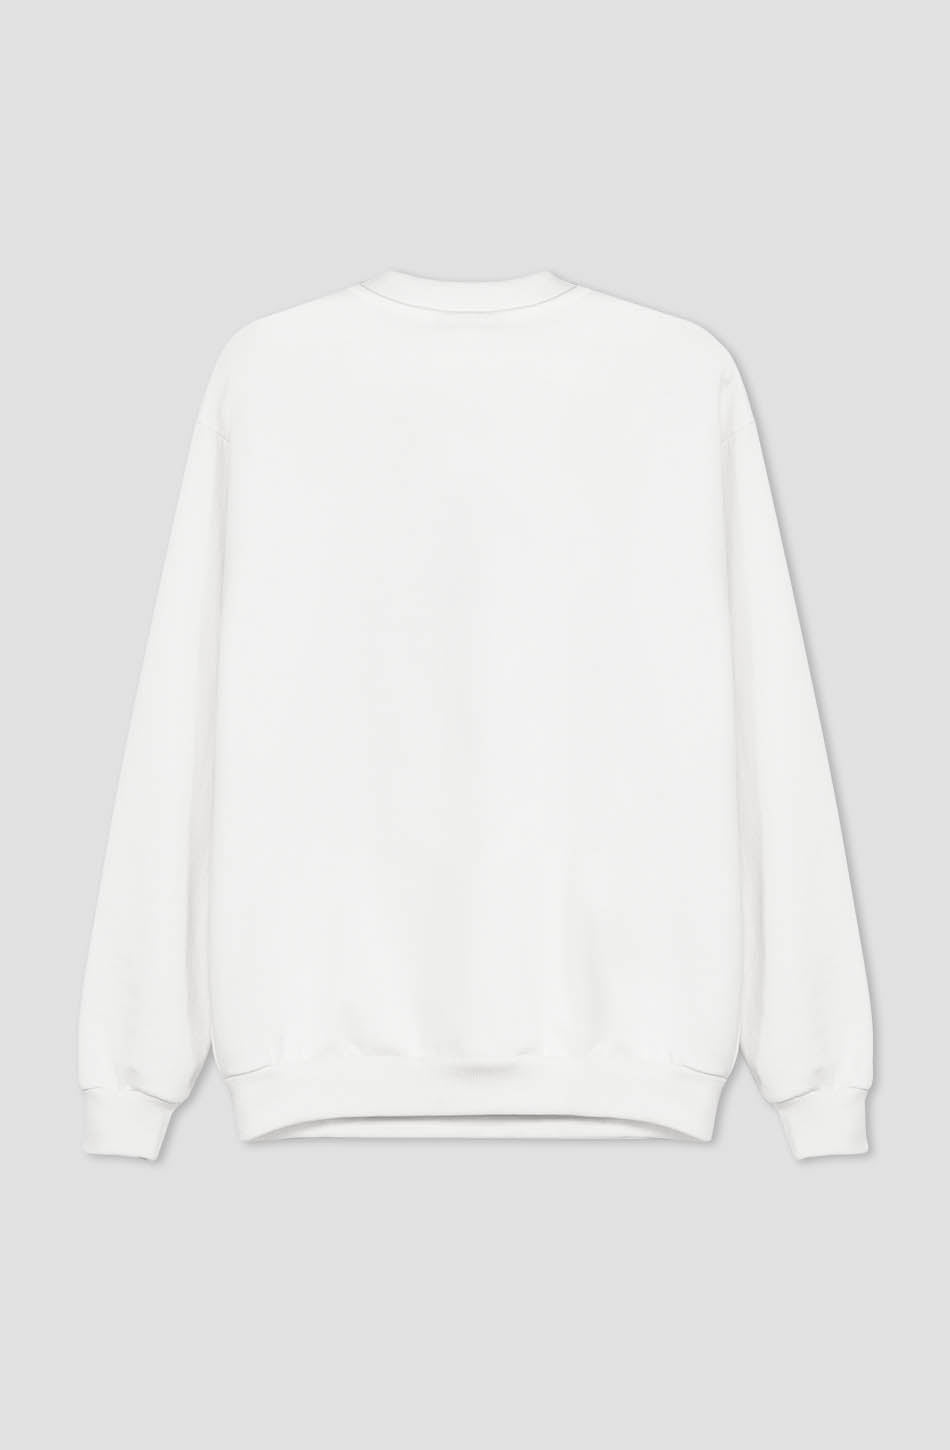 Fruiterer White Sweatshirt